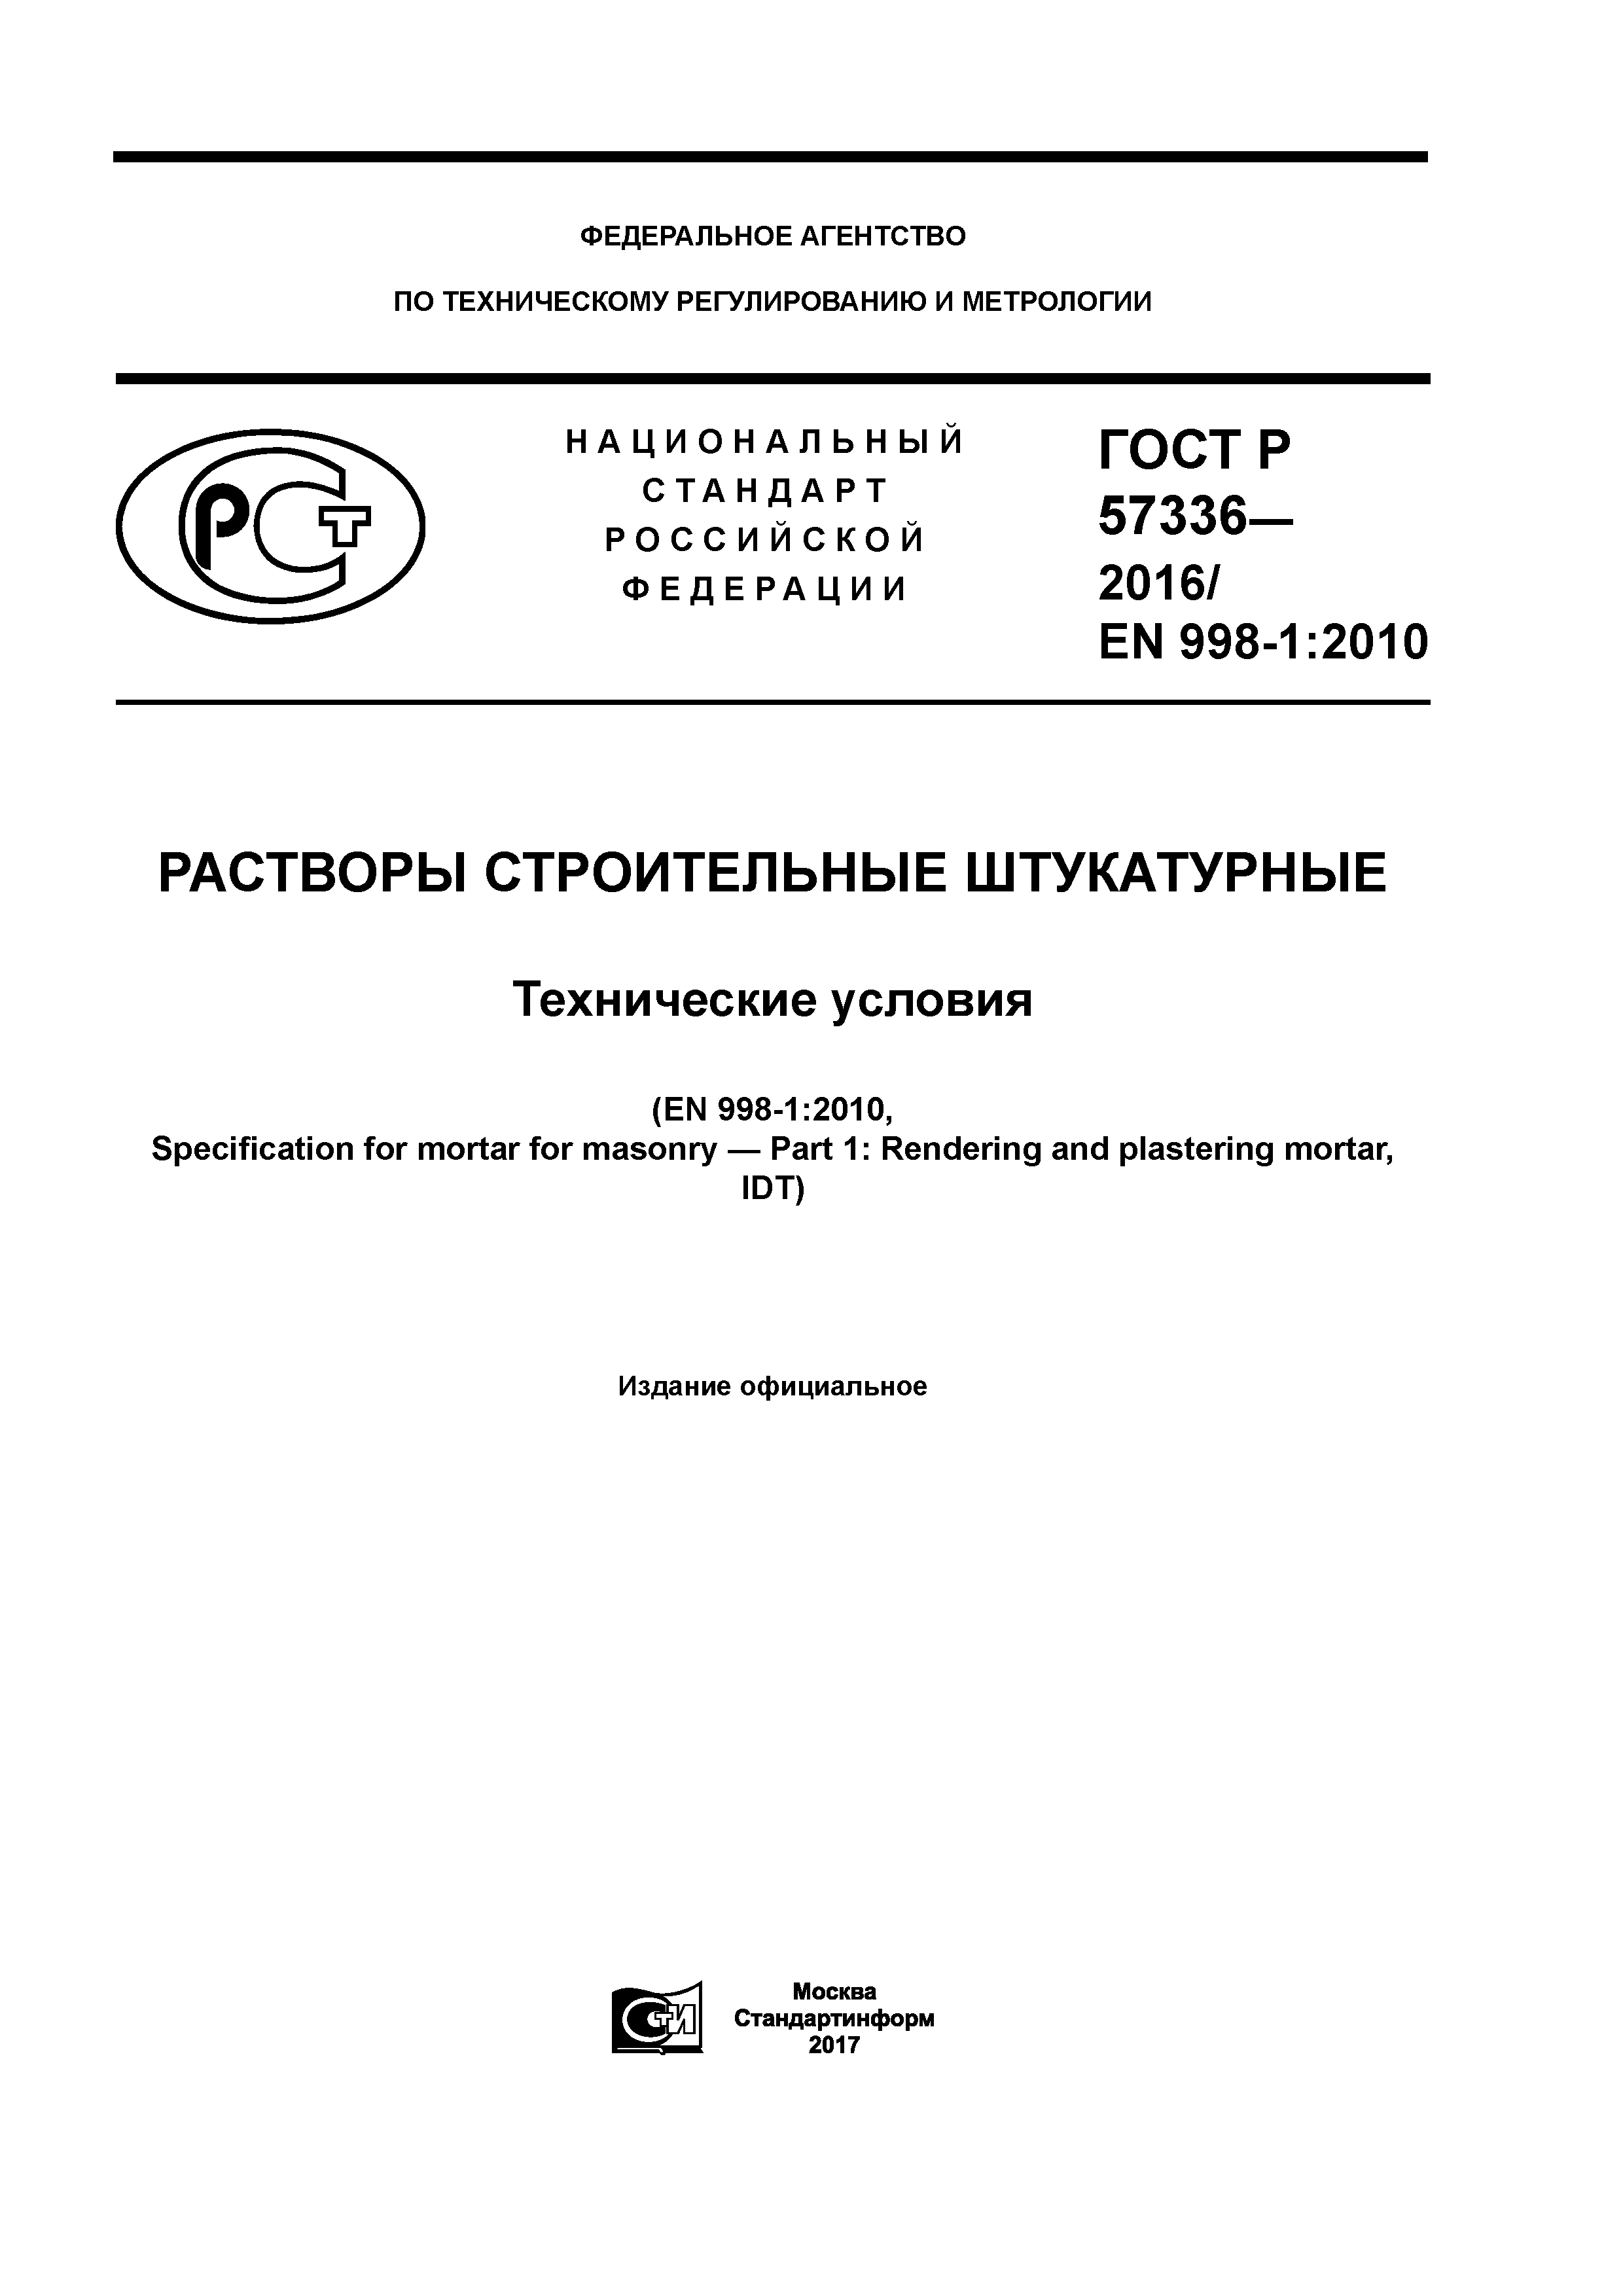 ГОСТ Р 57336-2016